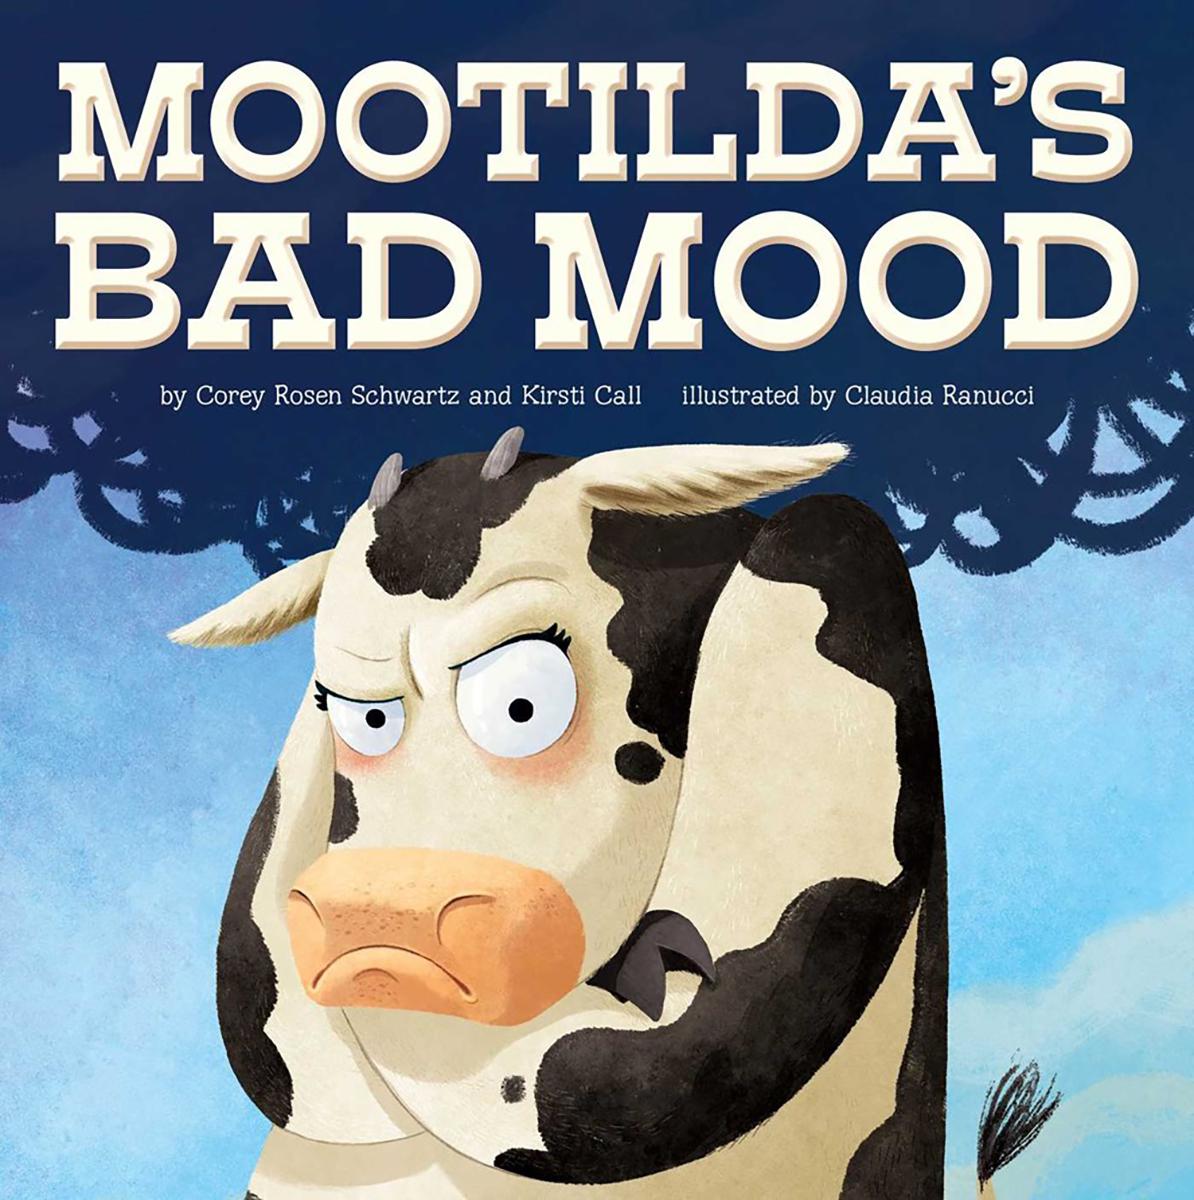  Mootilda's Bad Mood 